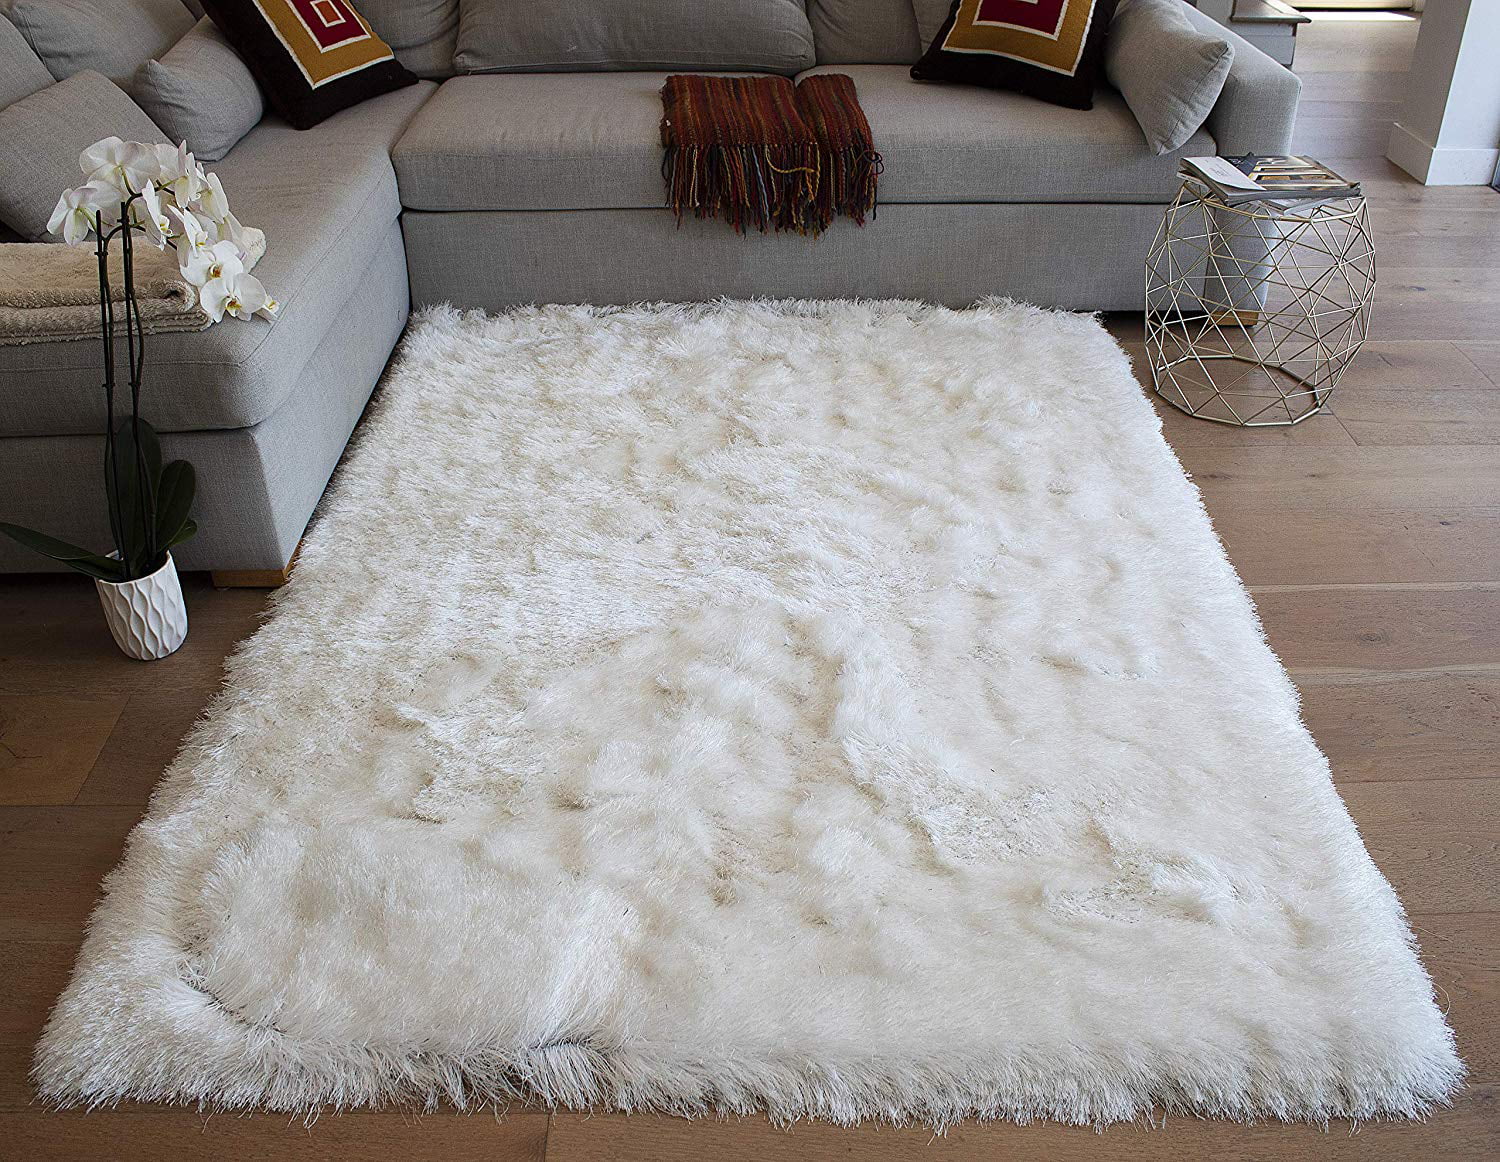 White Furry Rug For Living Room